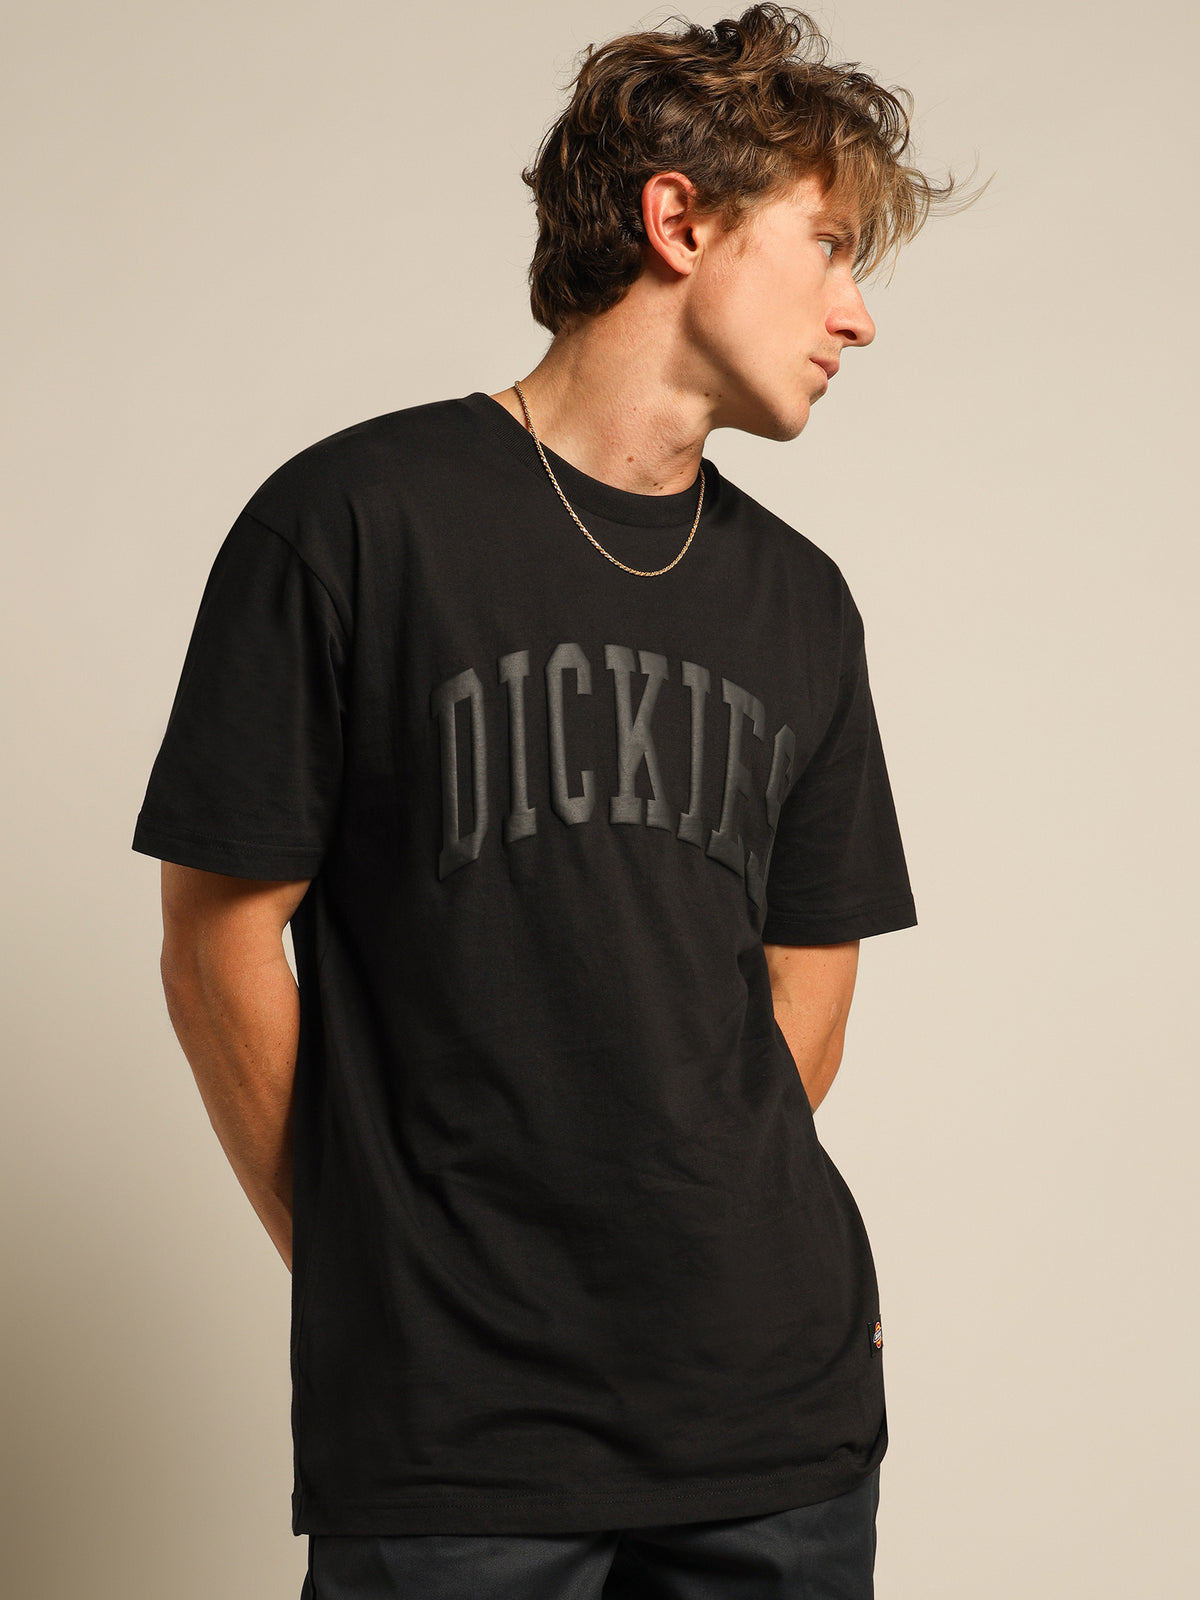 Lockhart T-Shirt in Black